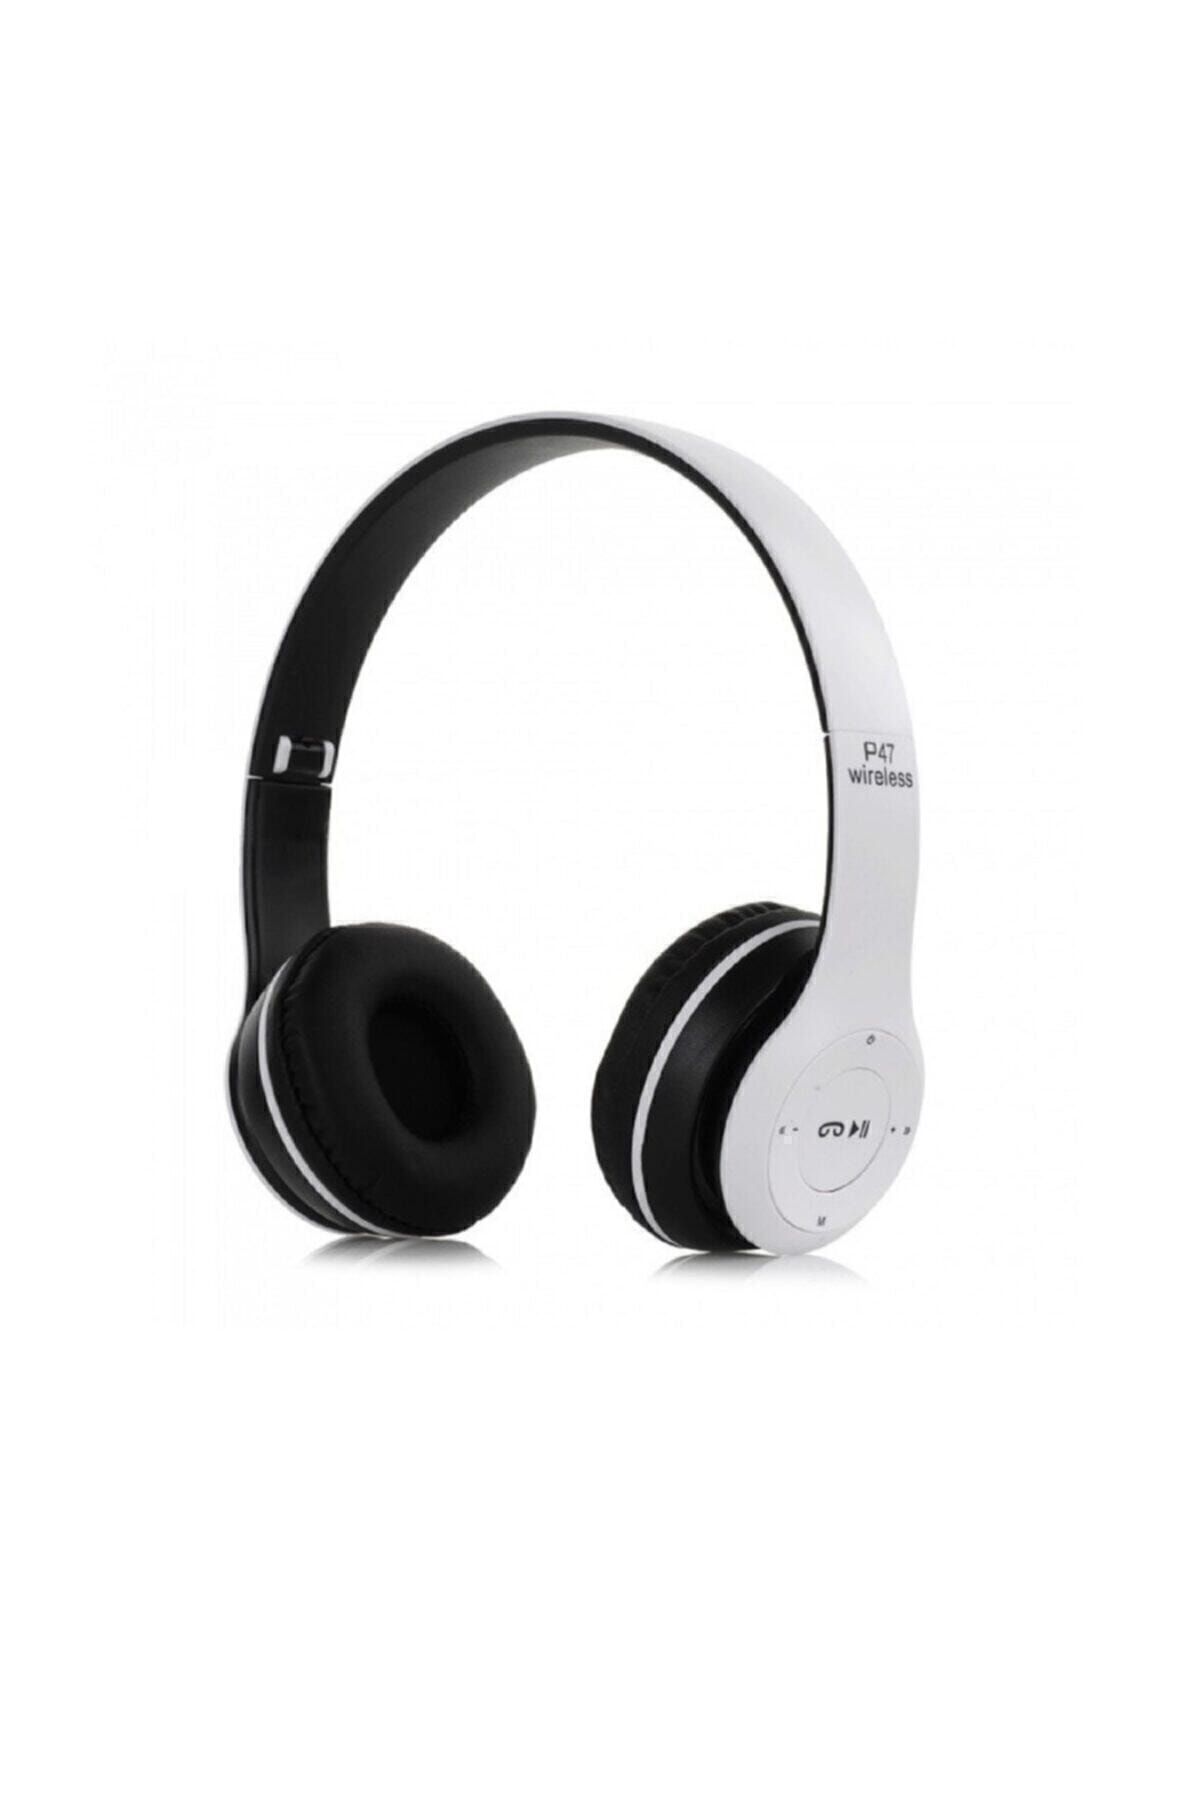 İlkDağ P47 Beyaz Wireless Bluetooth 5.0 Edr Kablosuz - Extra Bass - Kafa Üstü Kulaklık